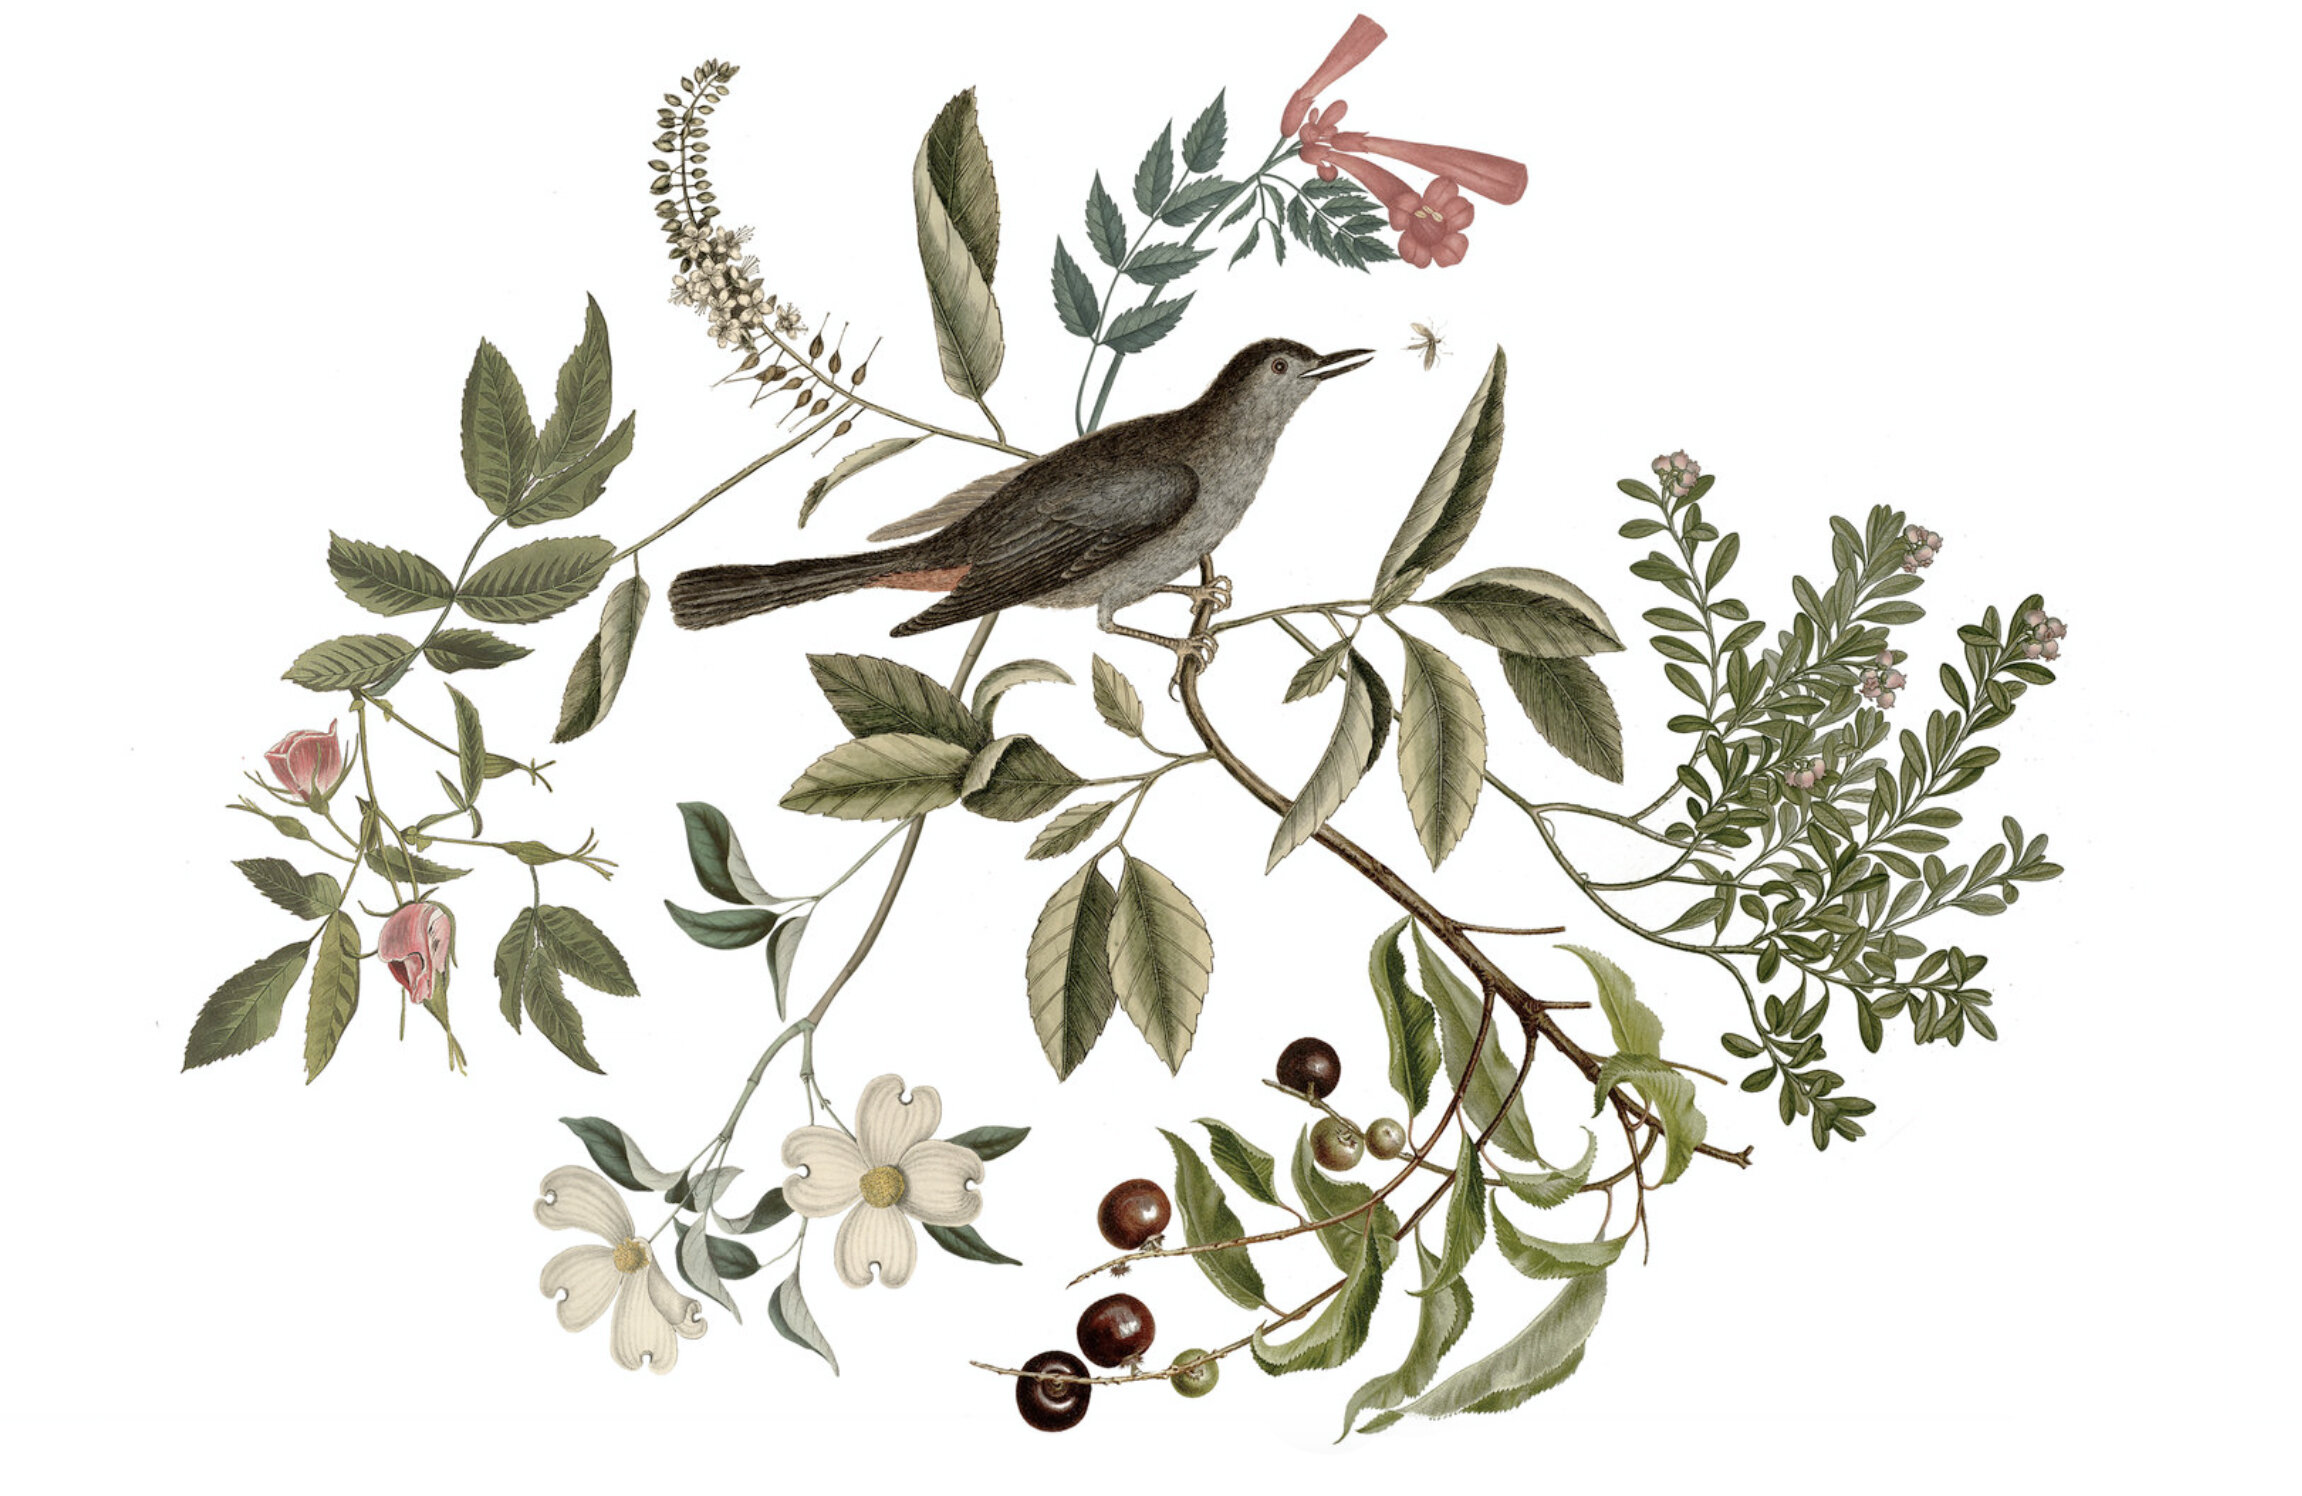  Digital Illustration of select flora native to Long Island  Clockwise from top: Trumpet Vine, Summersweet, American Cranberry, Black Cherry, Flowering Dogwood &amp; CarolinaRose   